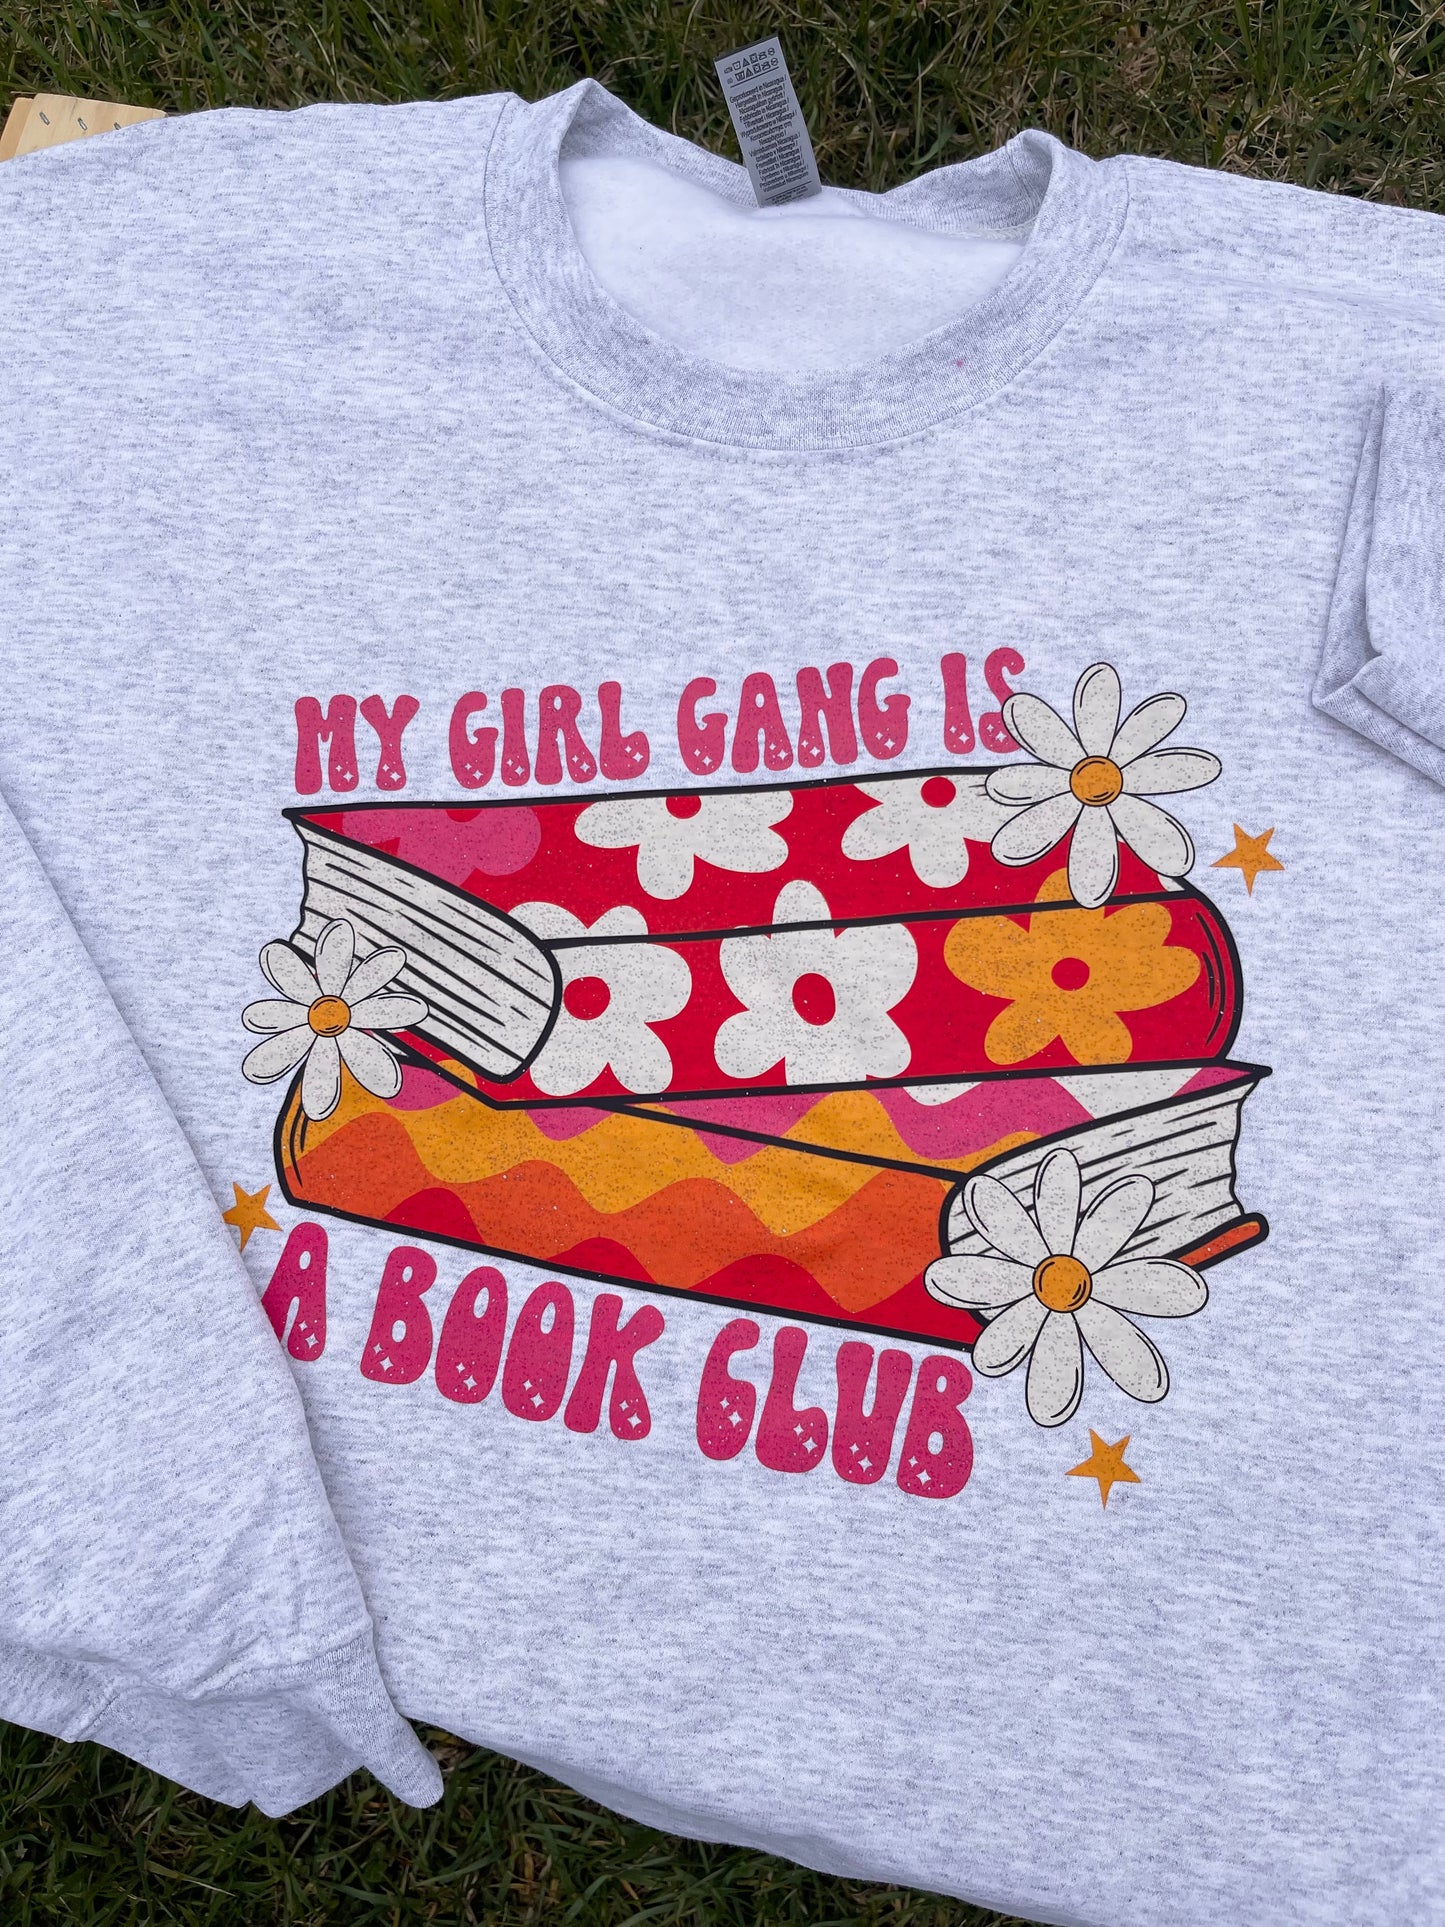 My girl gang is a book club